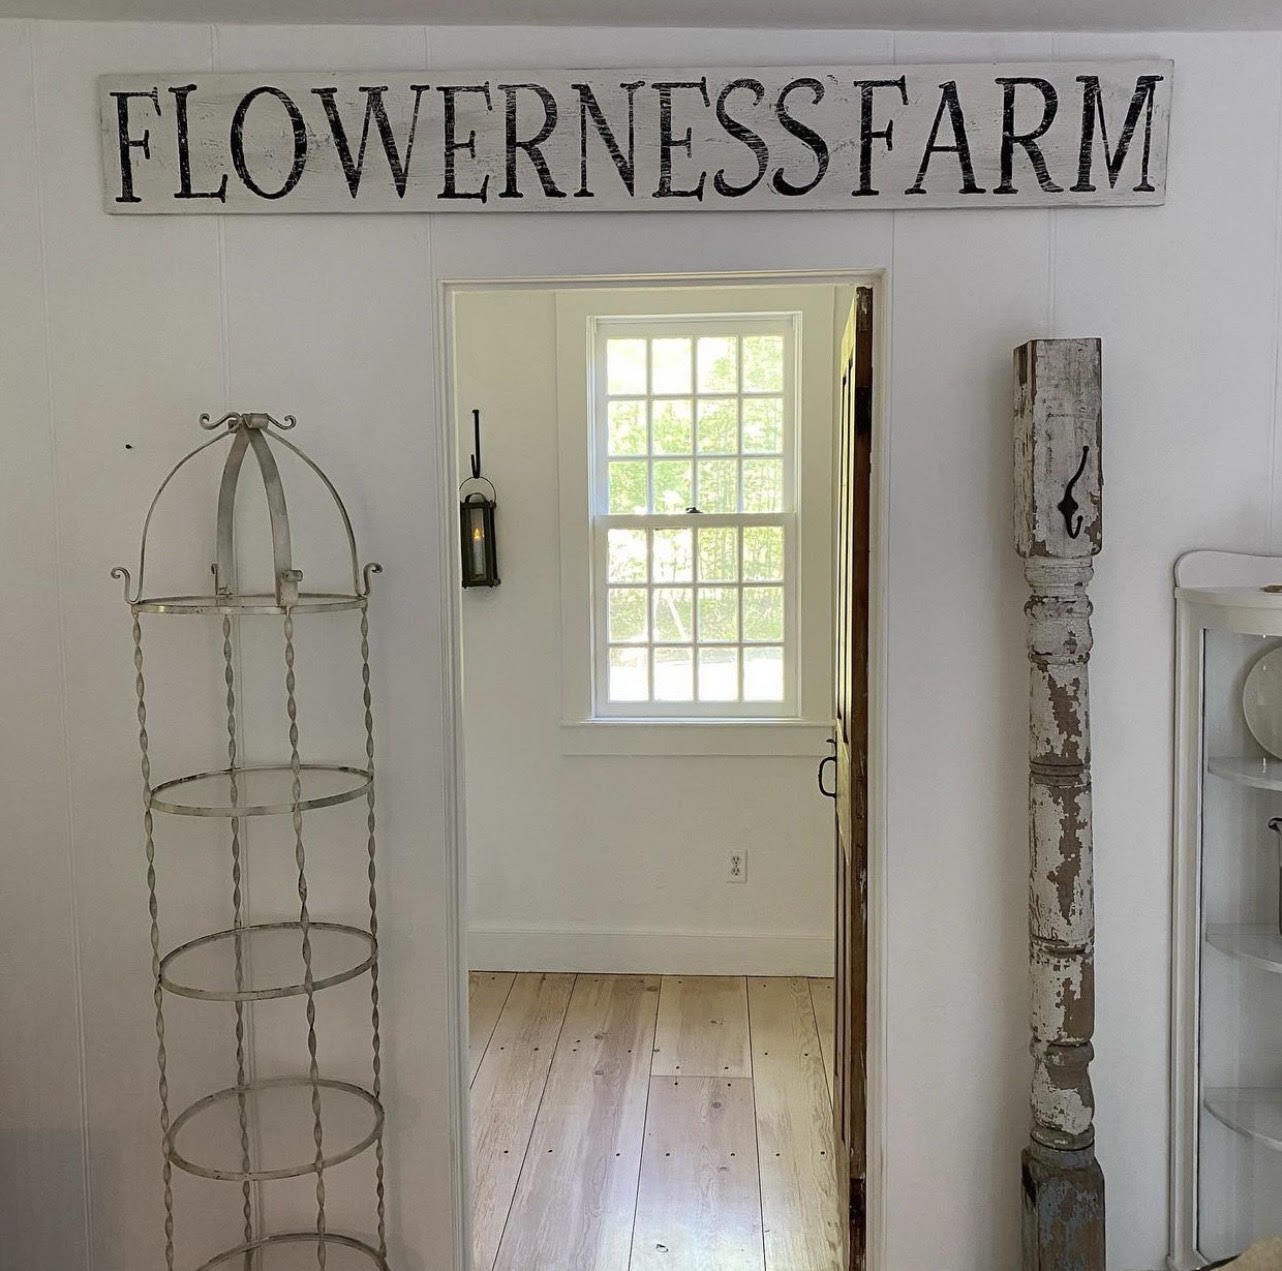 Flowerness Farm Room